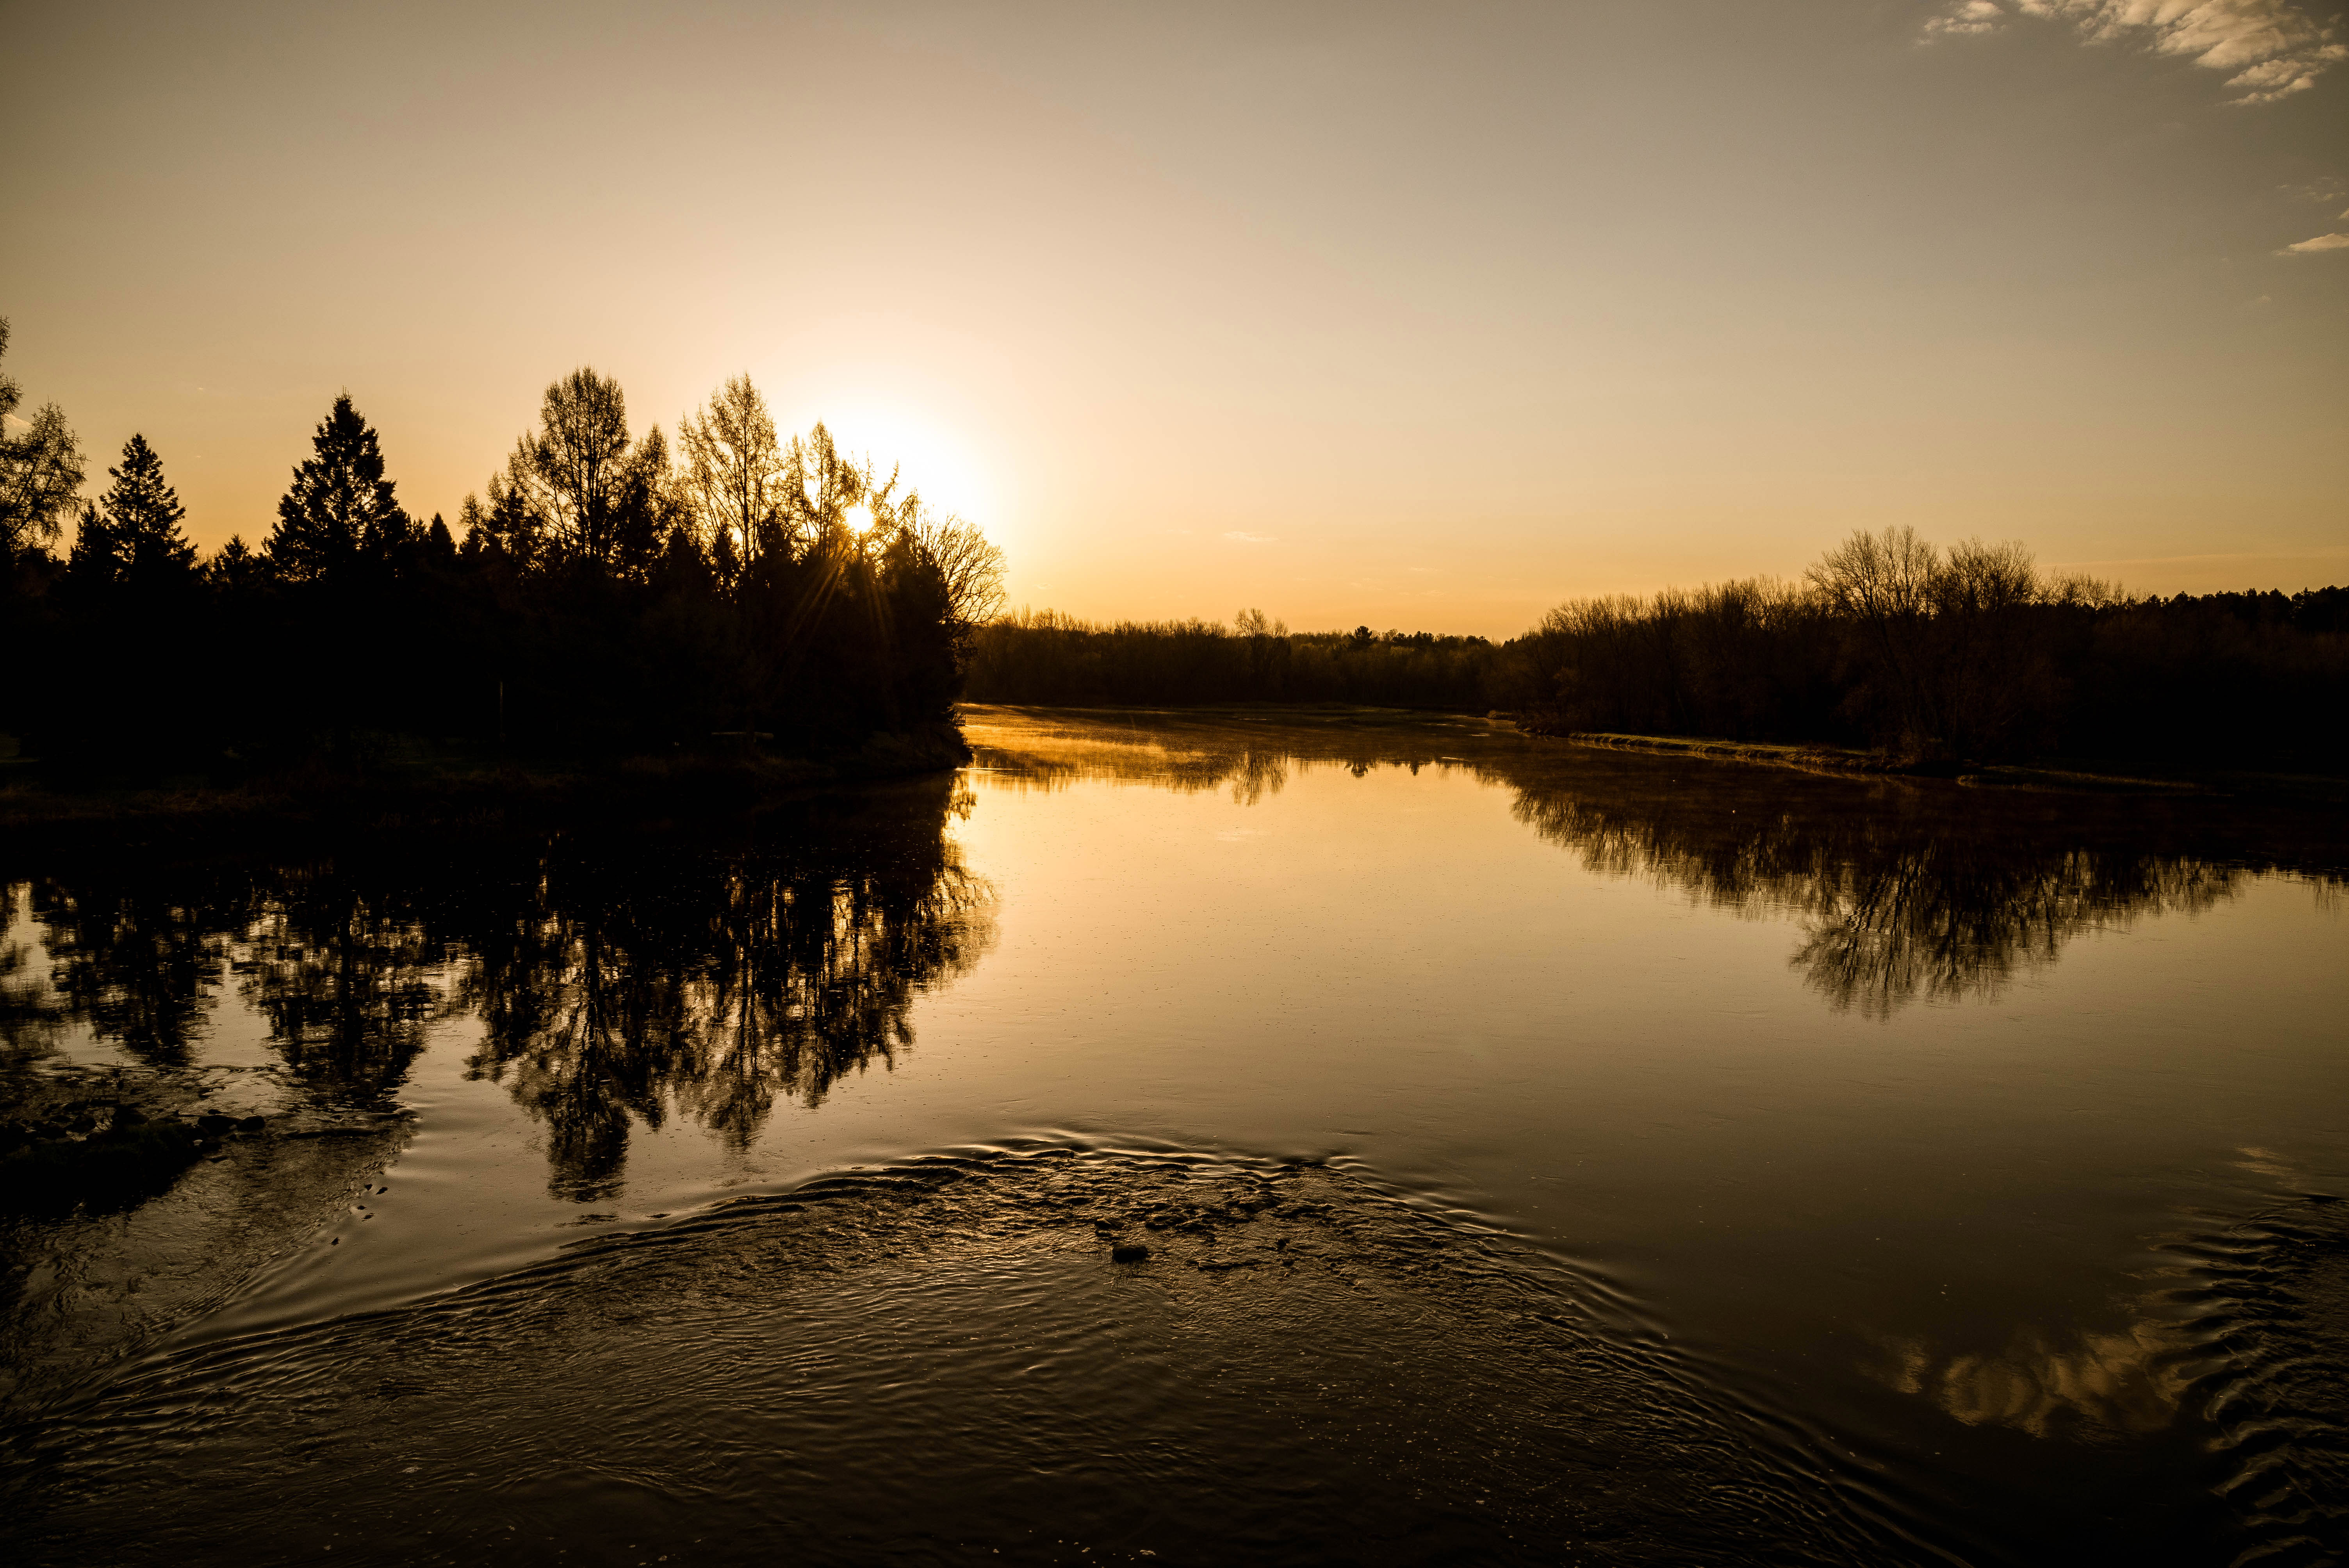 Nature Scenery at the Flambeau River image - Free stock photo - Public  Domain photo - CC0 Images